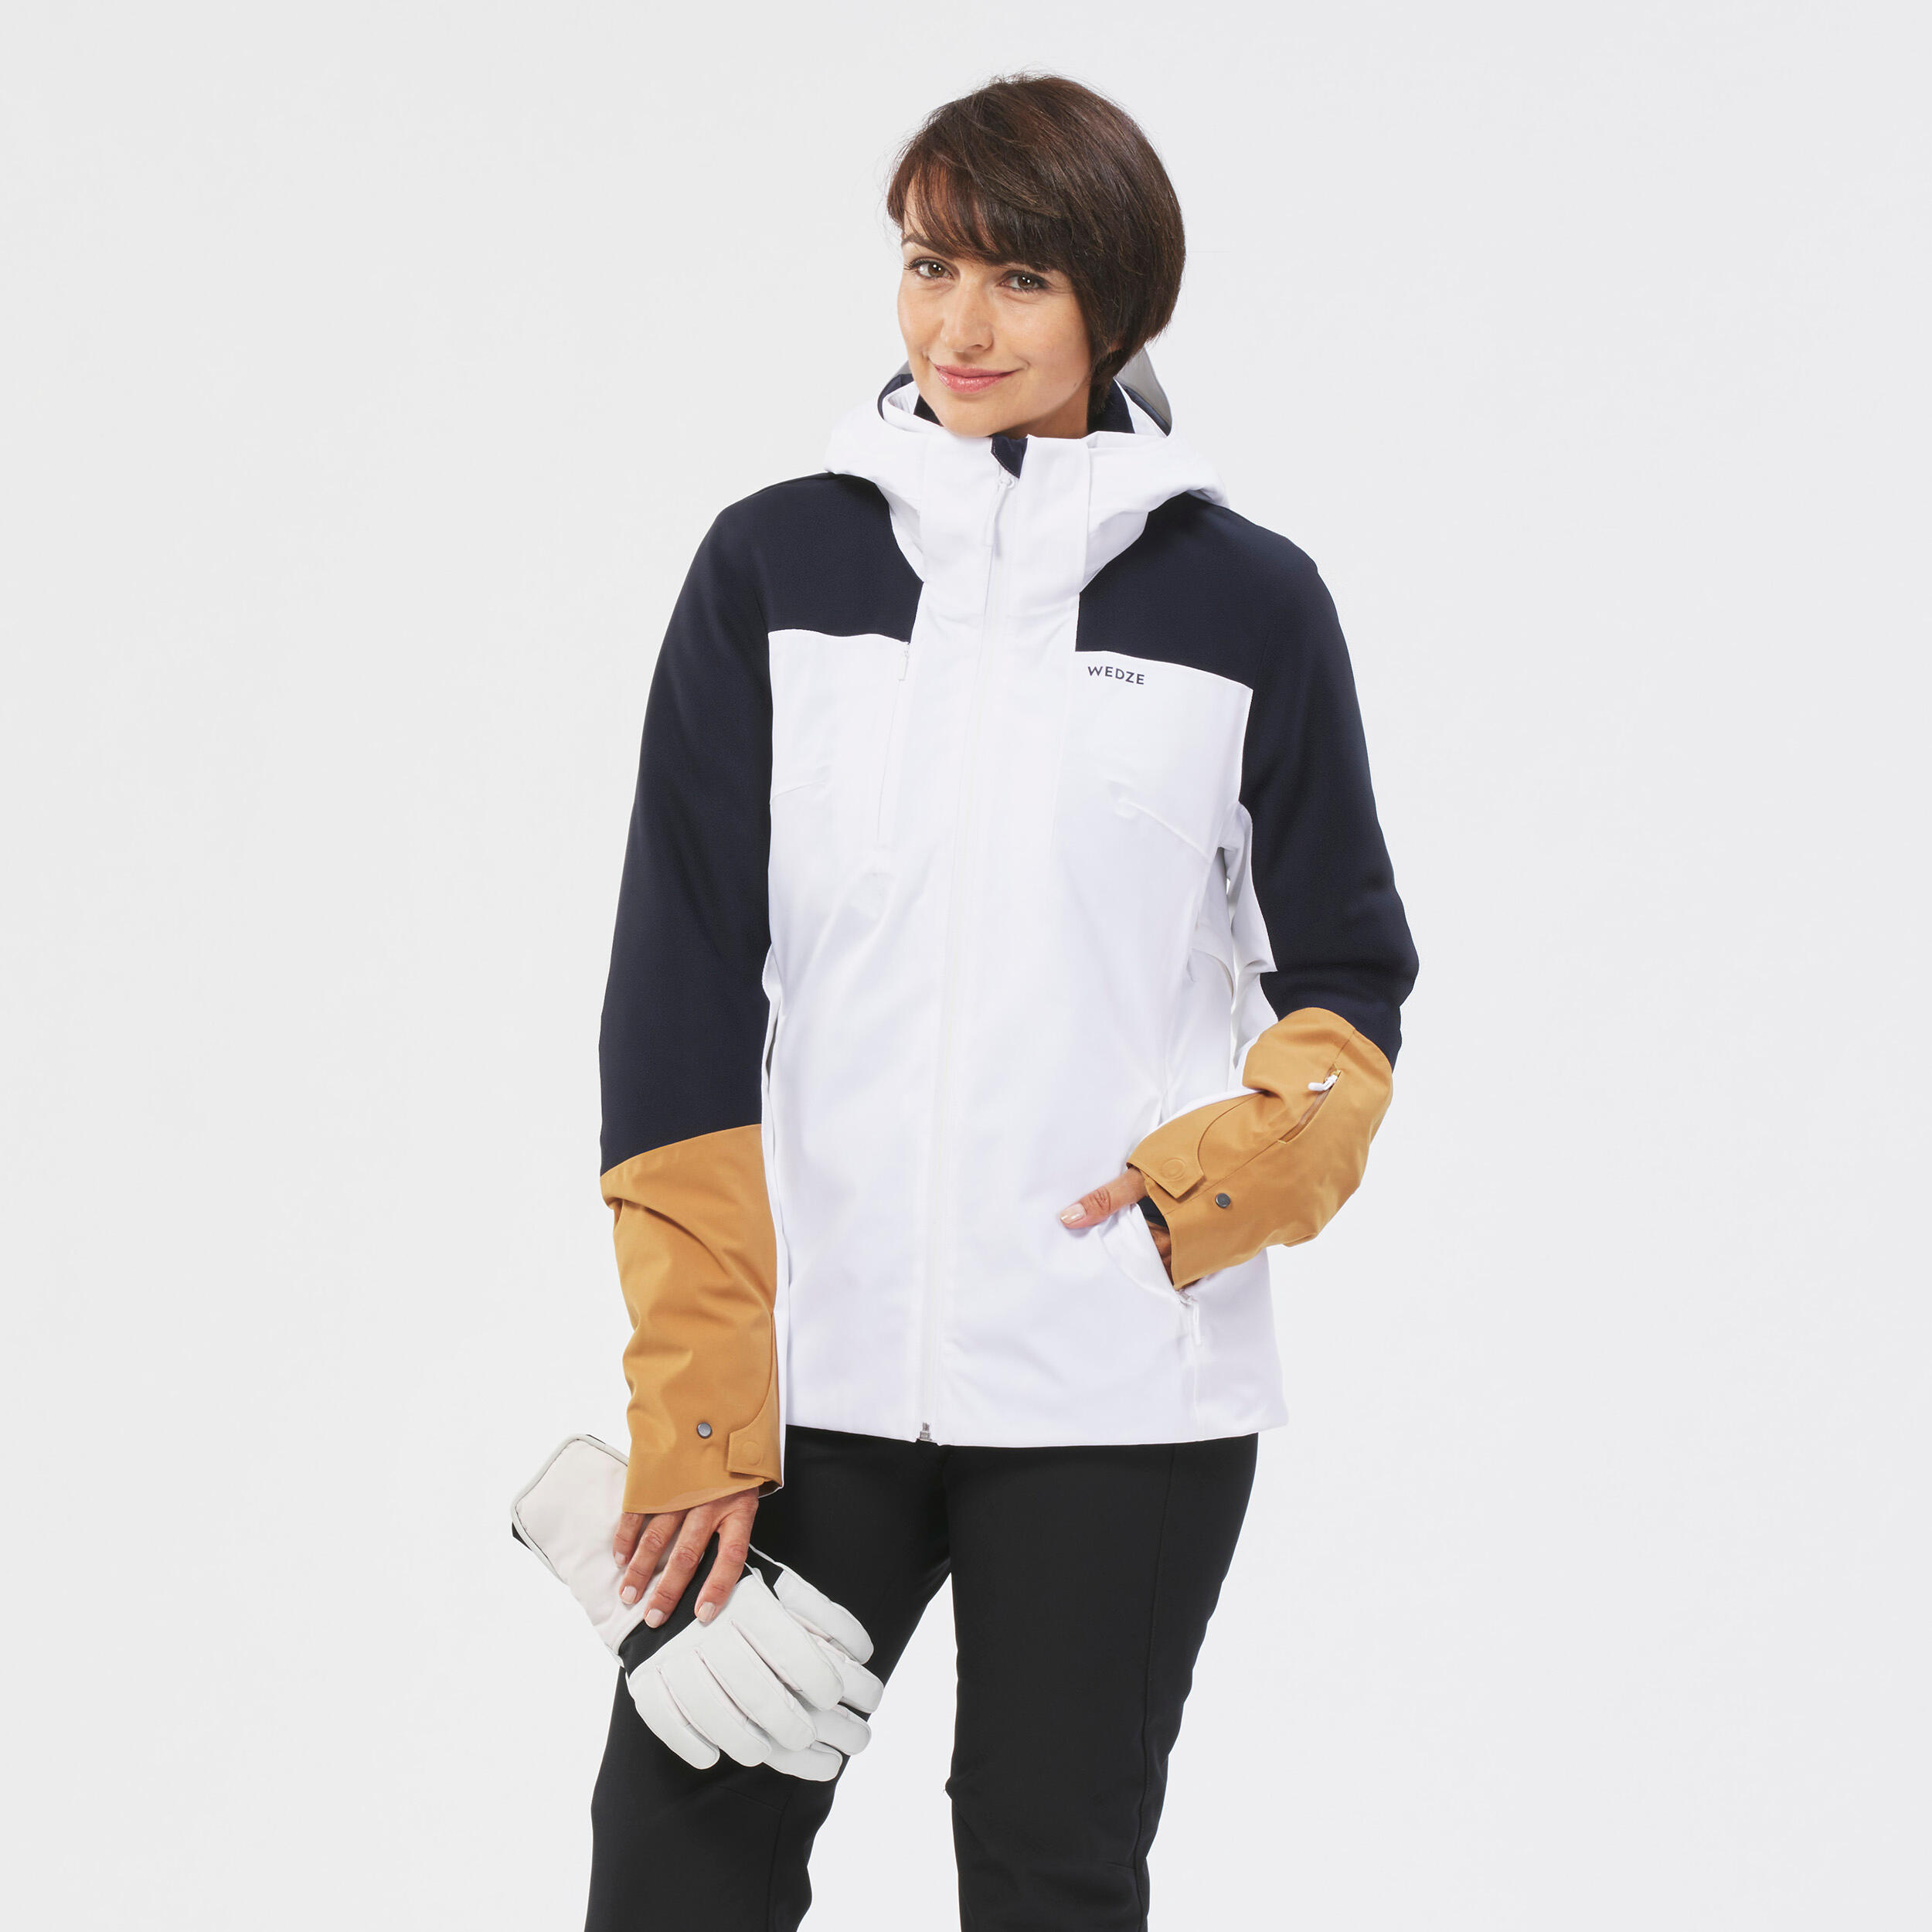 Women’s Ski Jacket 500 sport - white/navy/brown 1/15